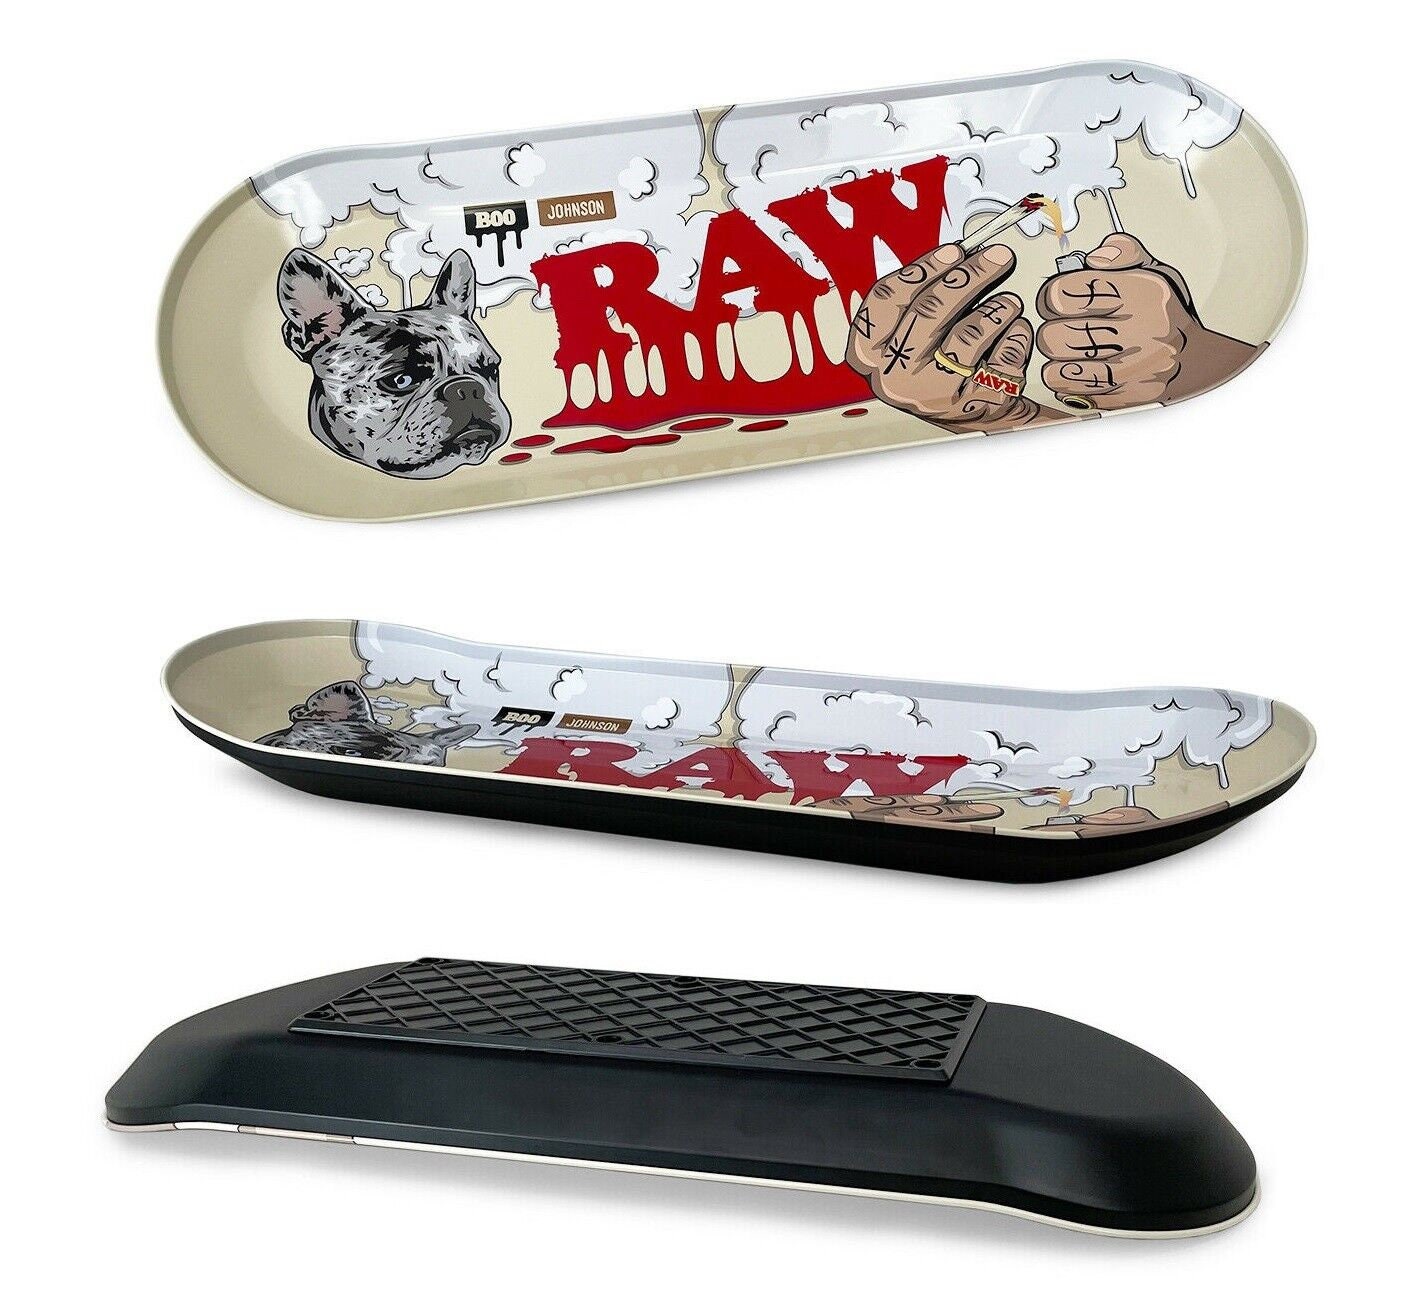 Limited Edition RAW X boo Johnson Collab Skateboard -